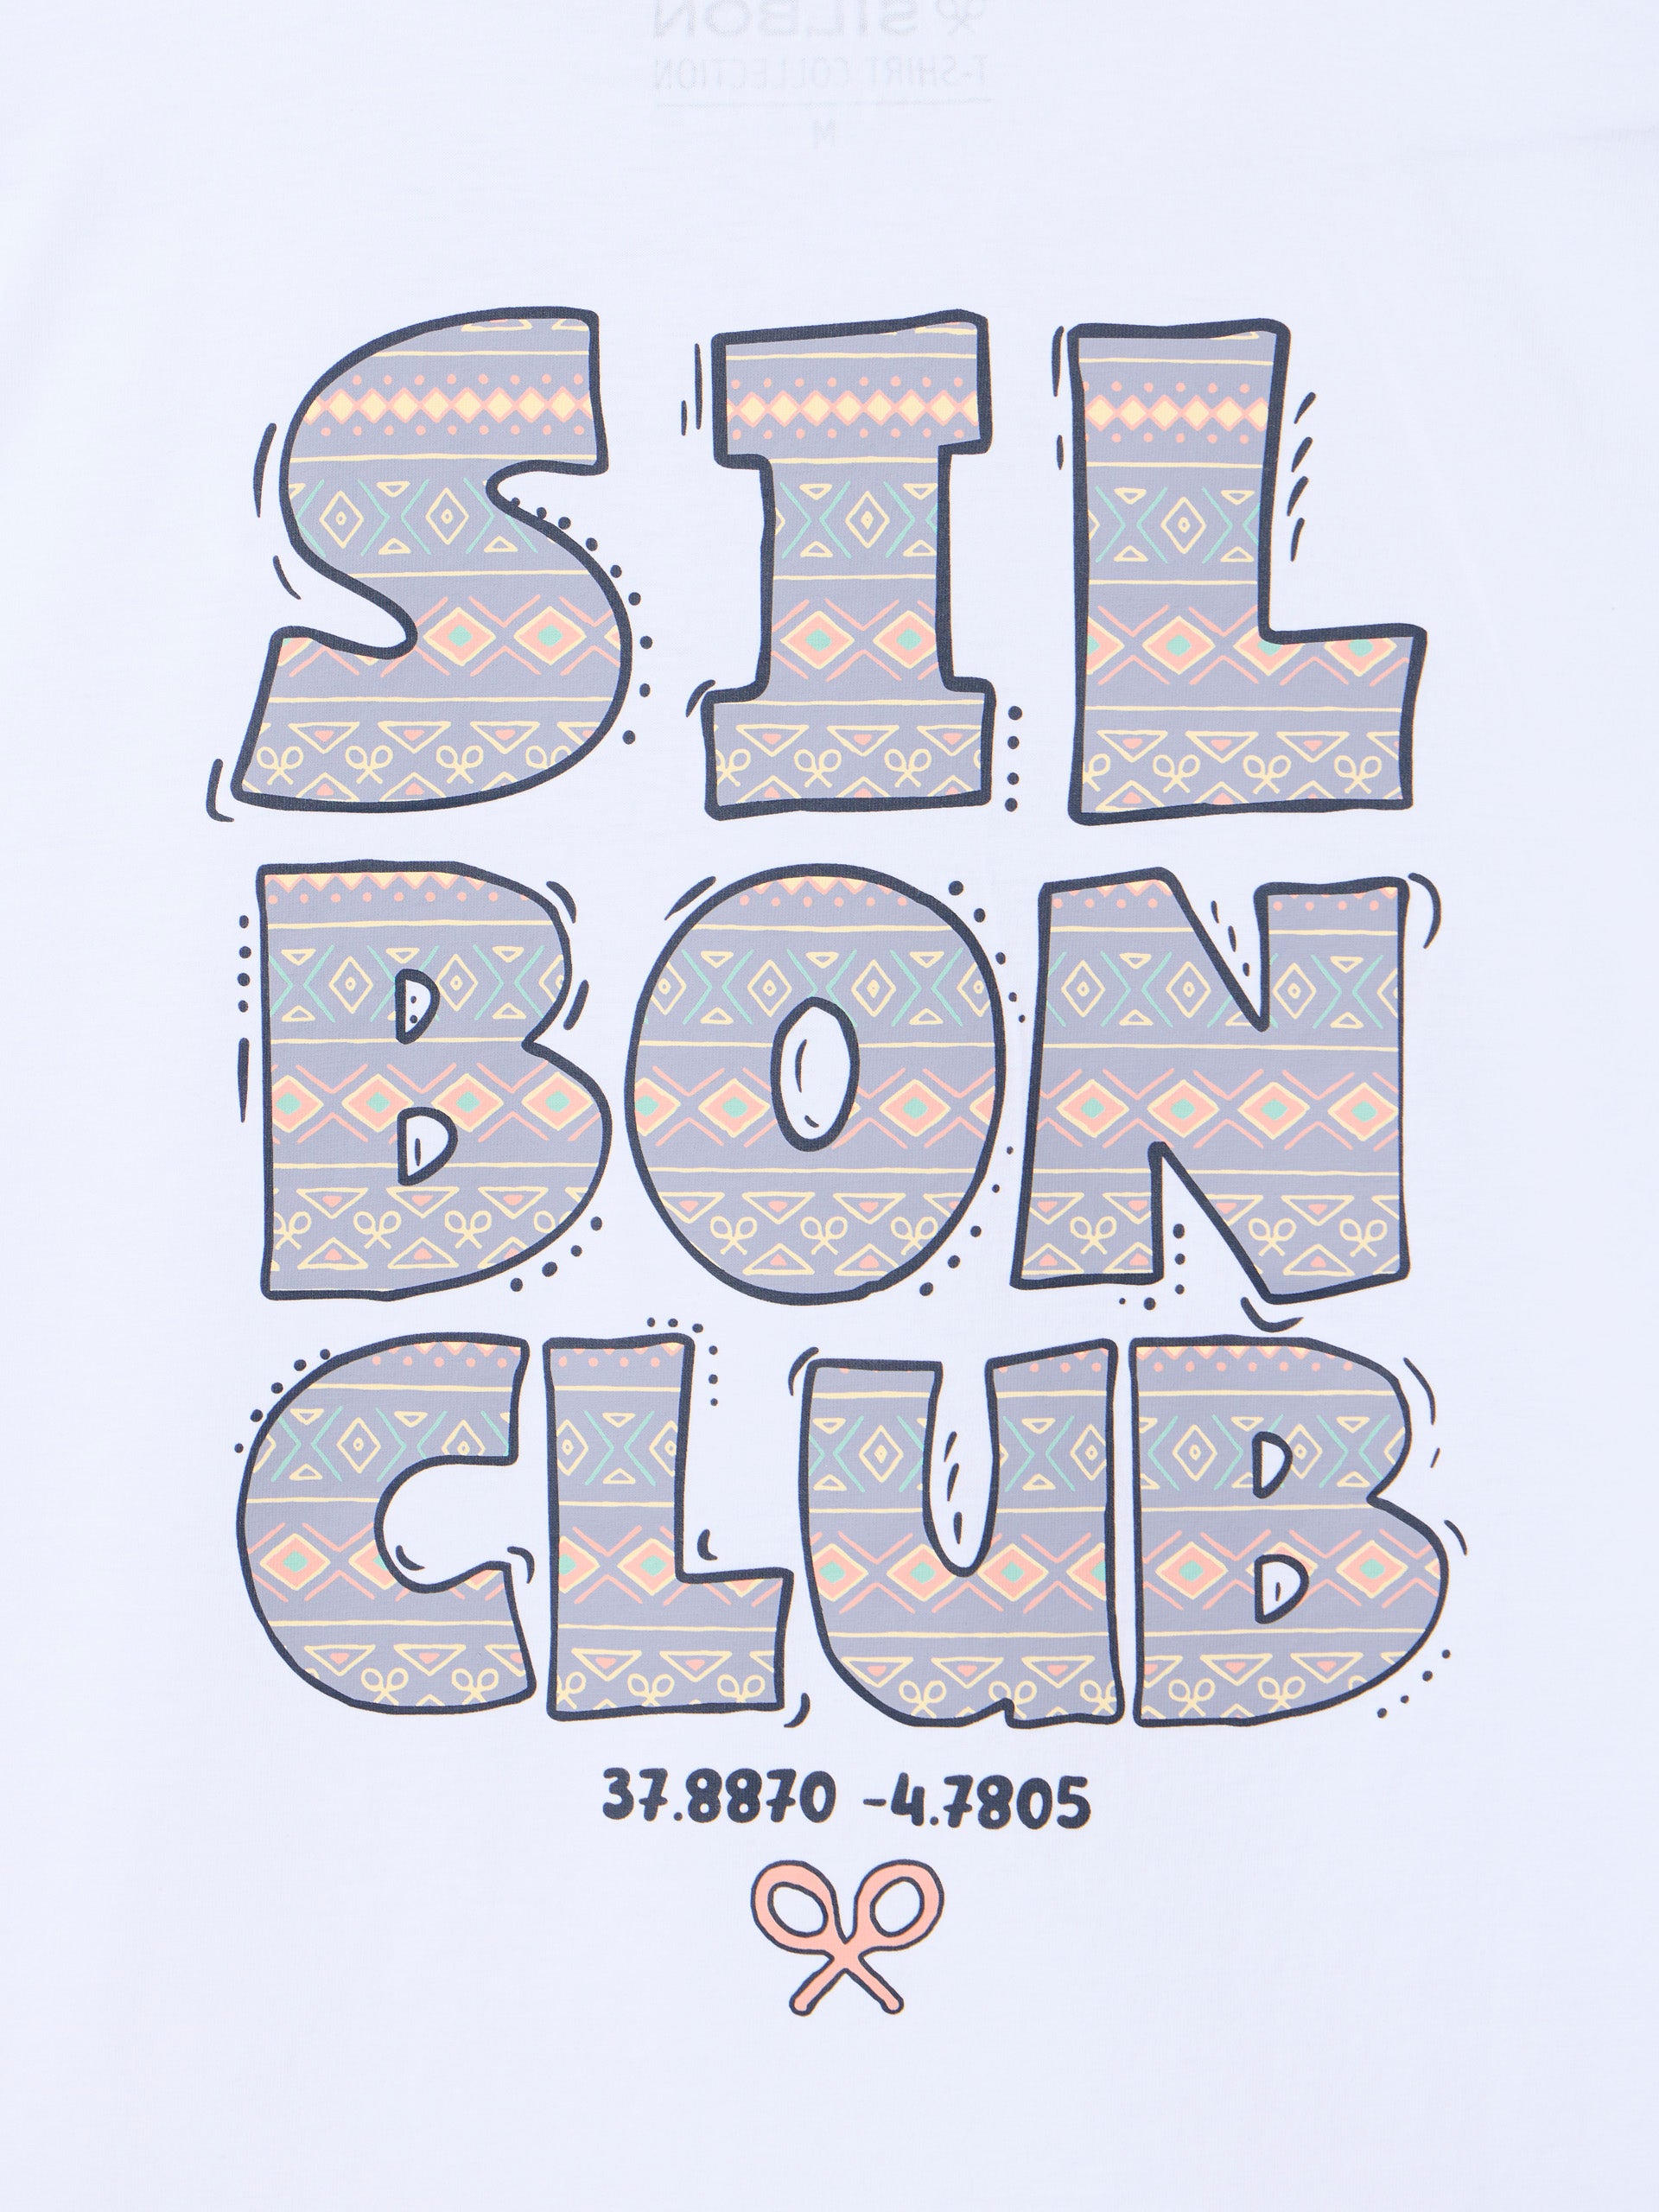 Camiseta etnica silbon club blanca